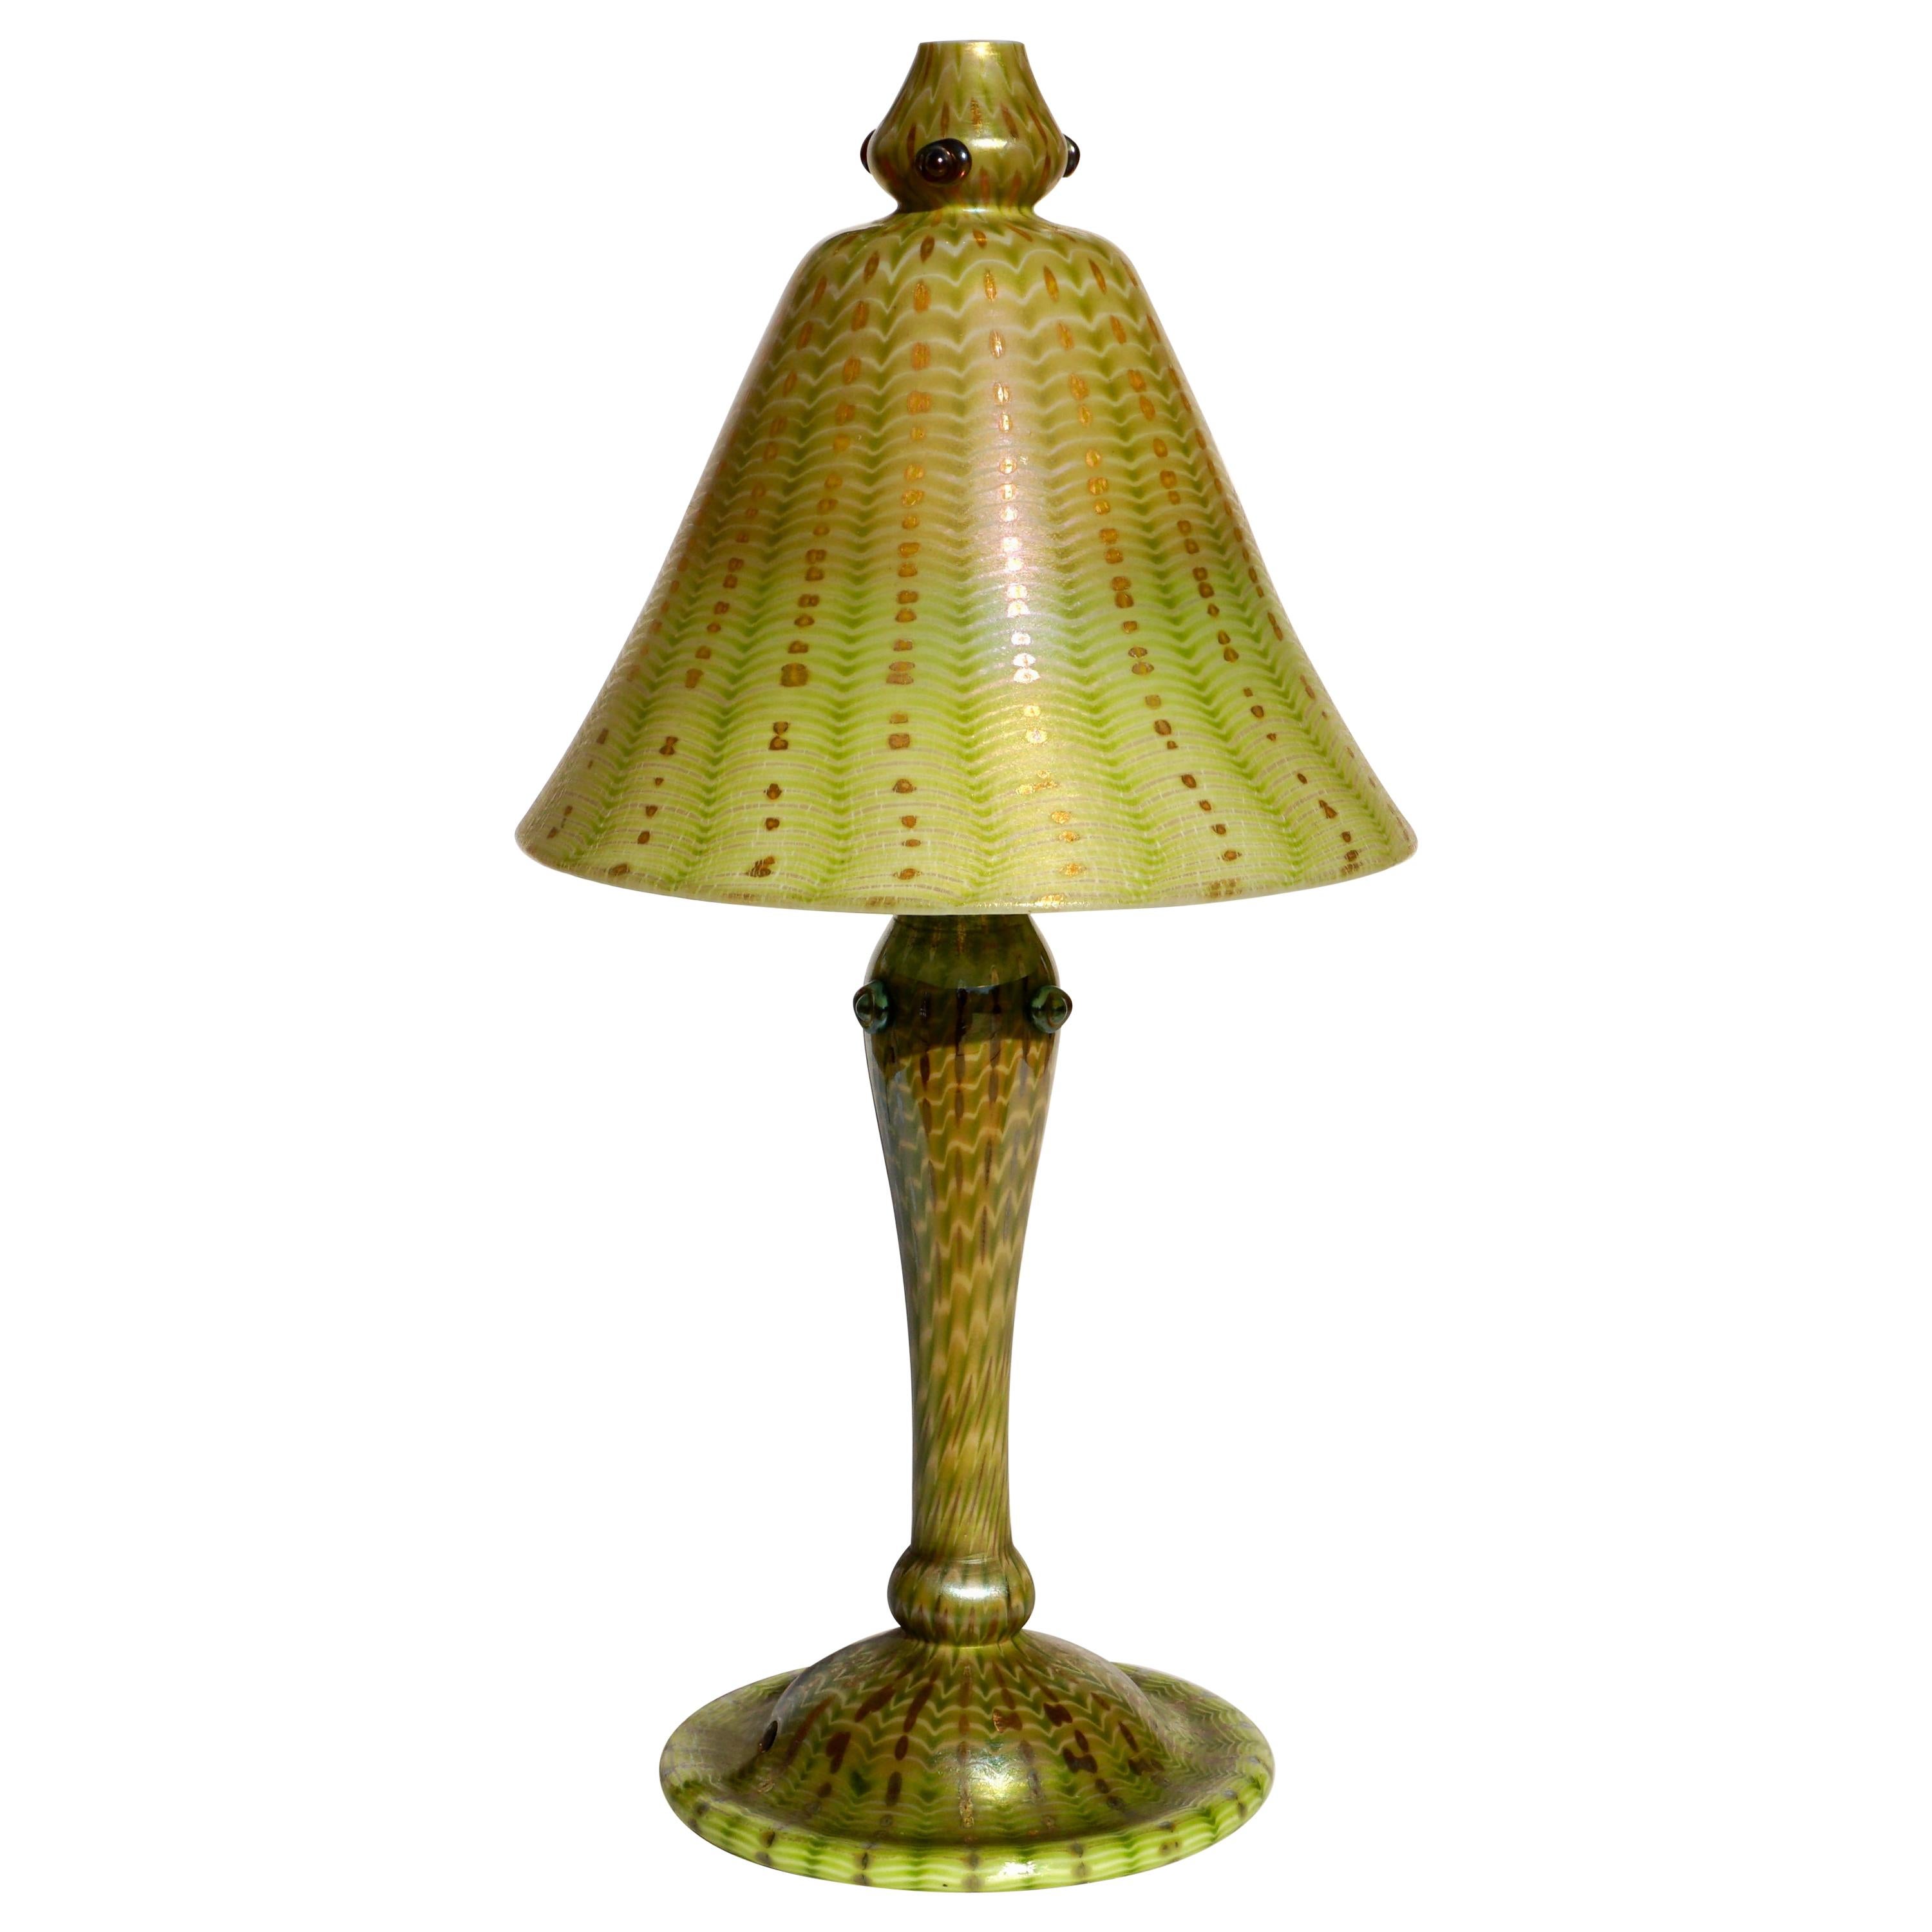 Tiffany Studios Decorated Arabian Favrile Lamp